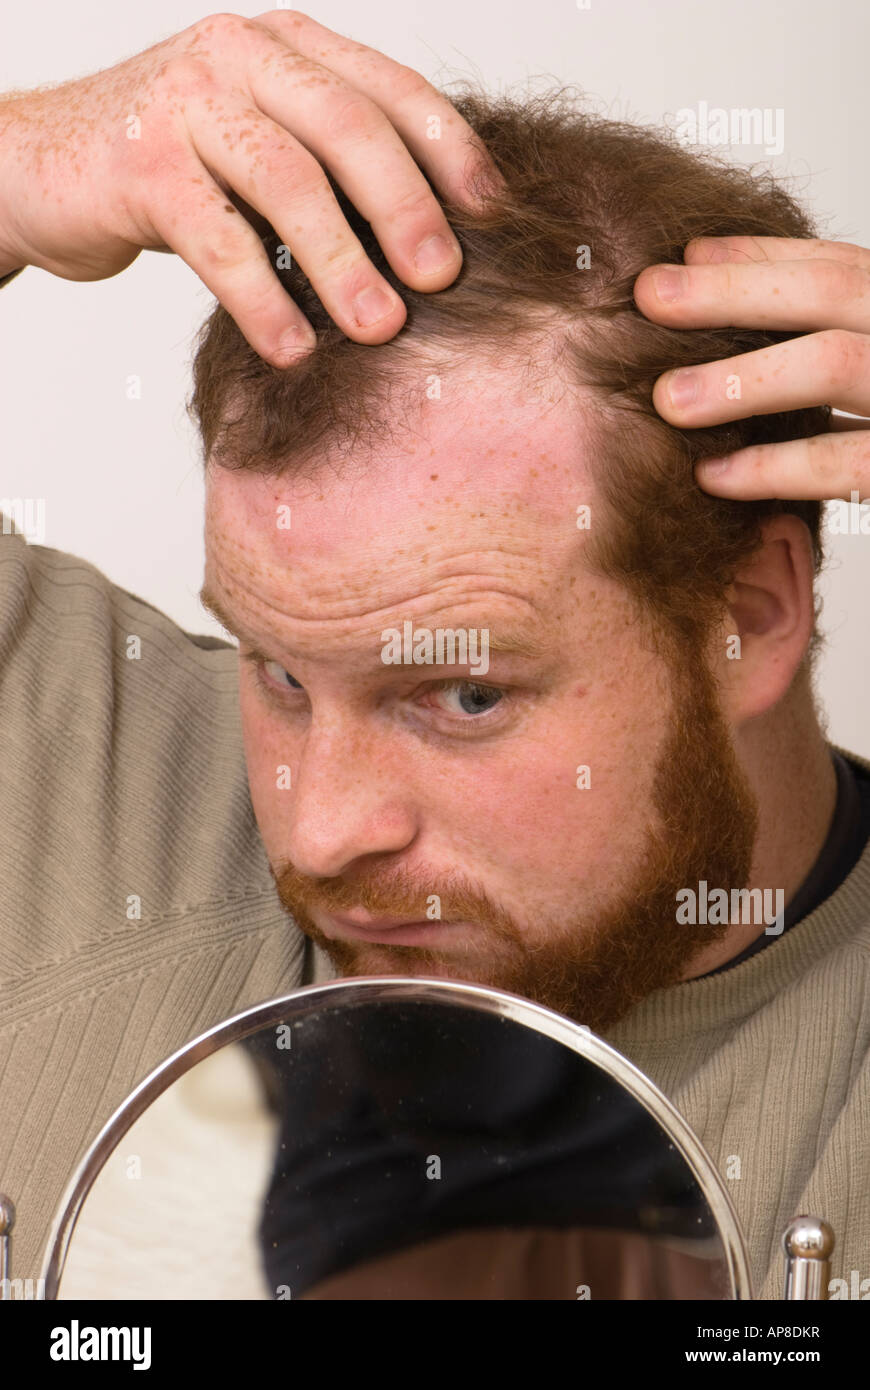 worried man looking in a mirror examining receding hairline worried he is going bald Stock Photo